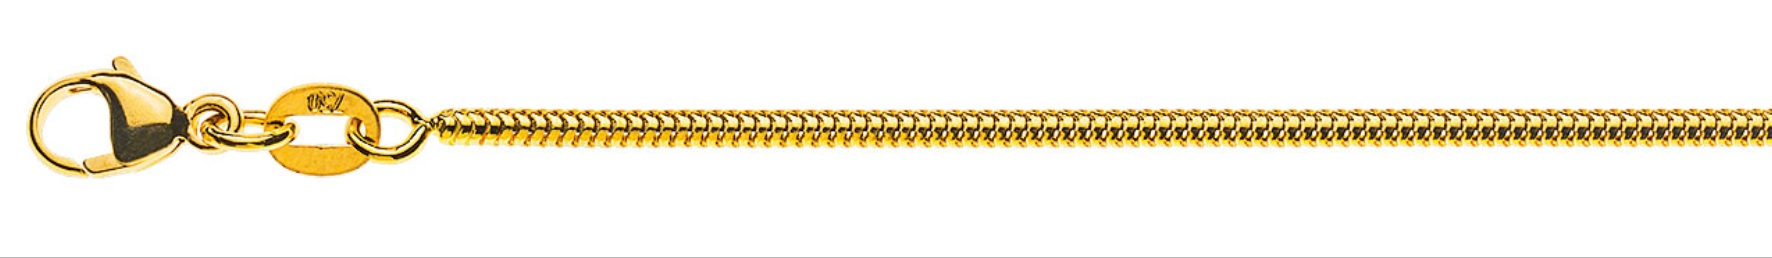 AURONOS Prestige Necklace yellow gold 18K snake chain 45cm 1.6mm